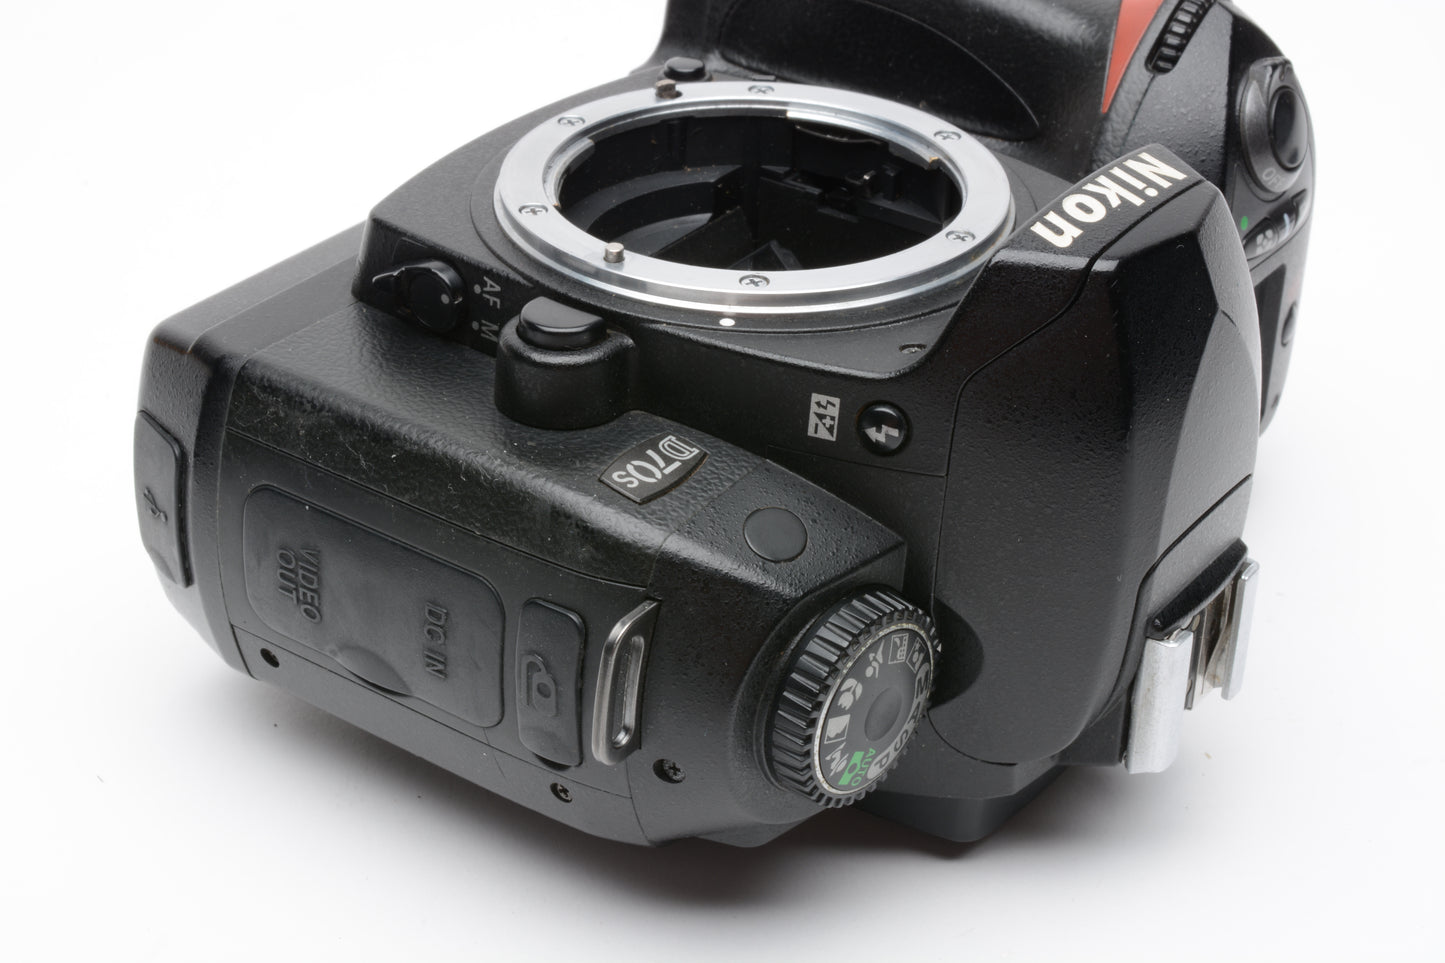 Nikon D70s DSLR body w/2 batts., charger, strap, 6493 Acts!